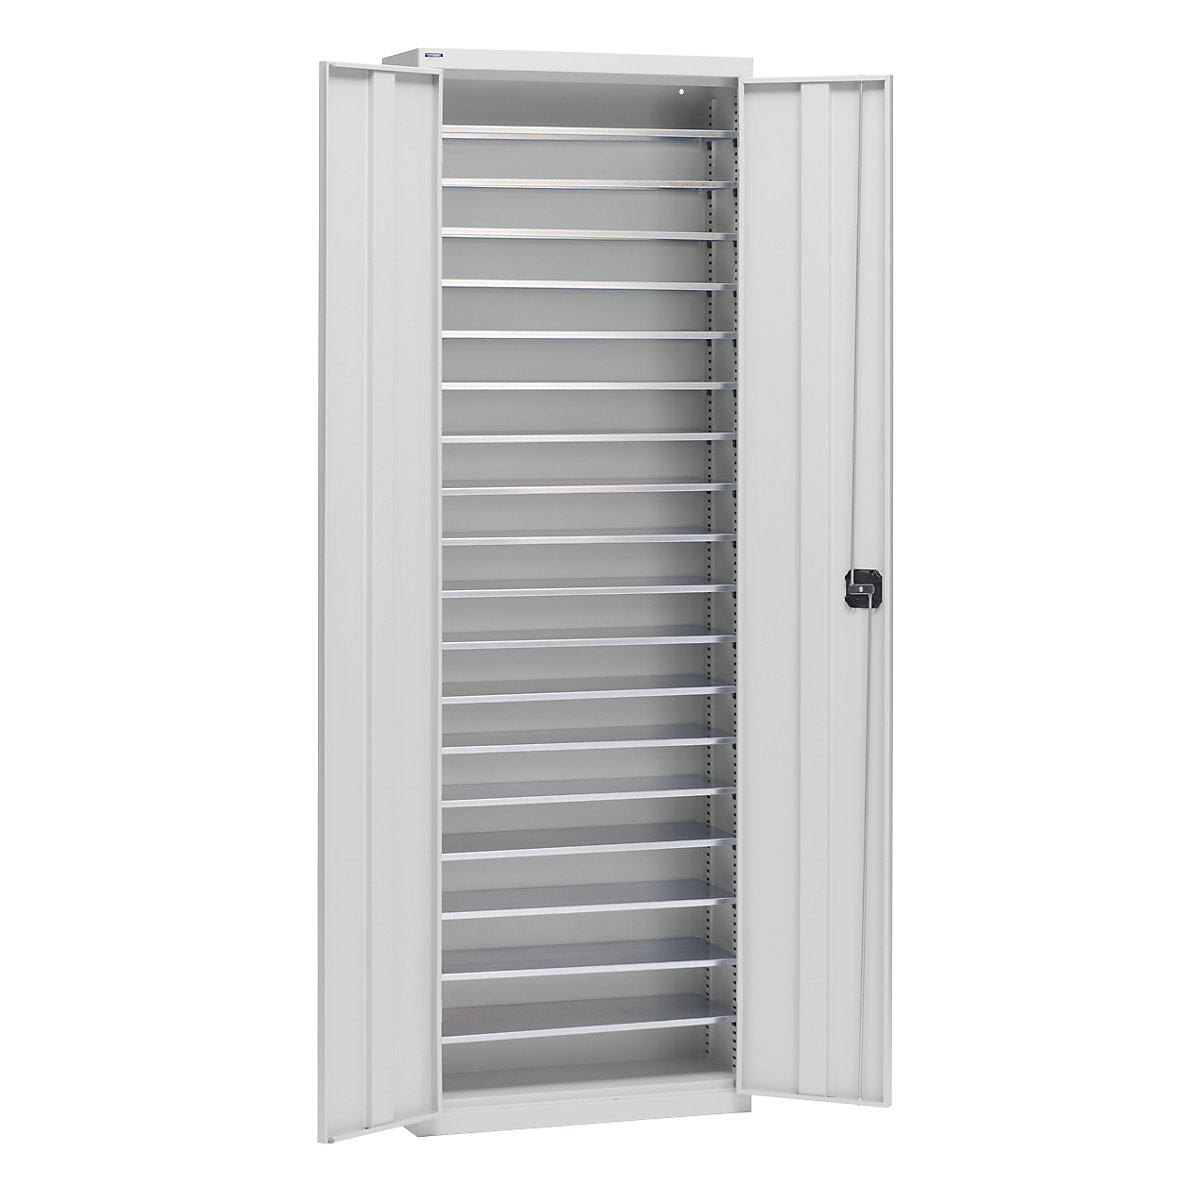 Storage cupboard made of sheet steel – eurokraft pro, height 2000 mm, light grey RAL 7035, 18 shelves-12